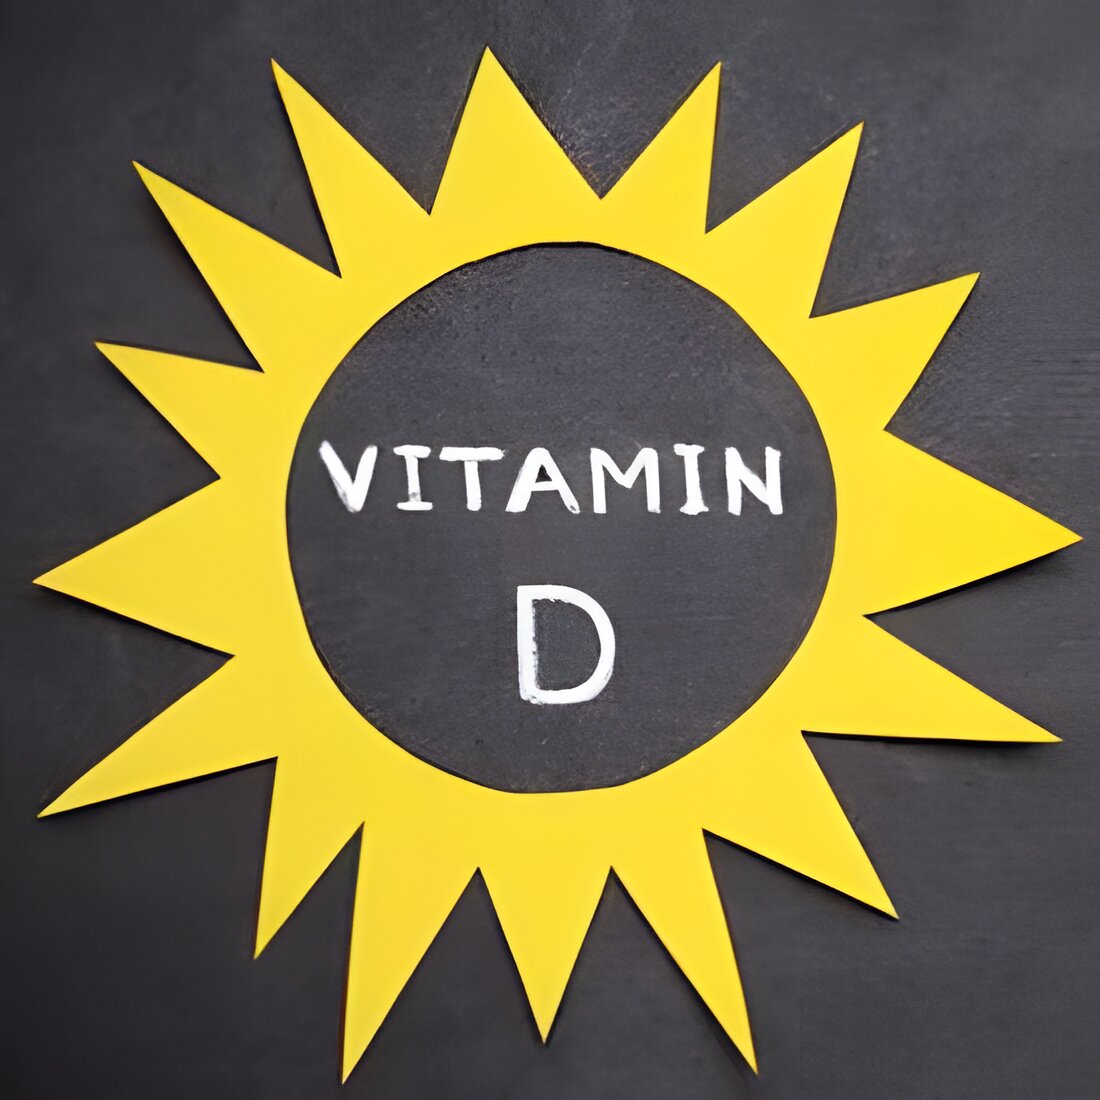 Free Vitamin D Supplements